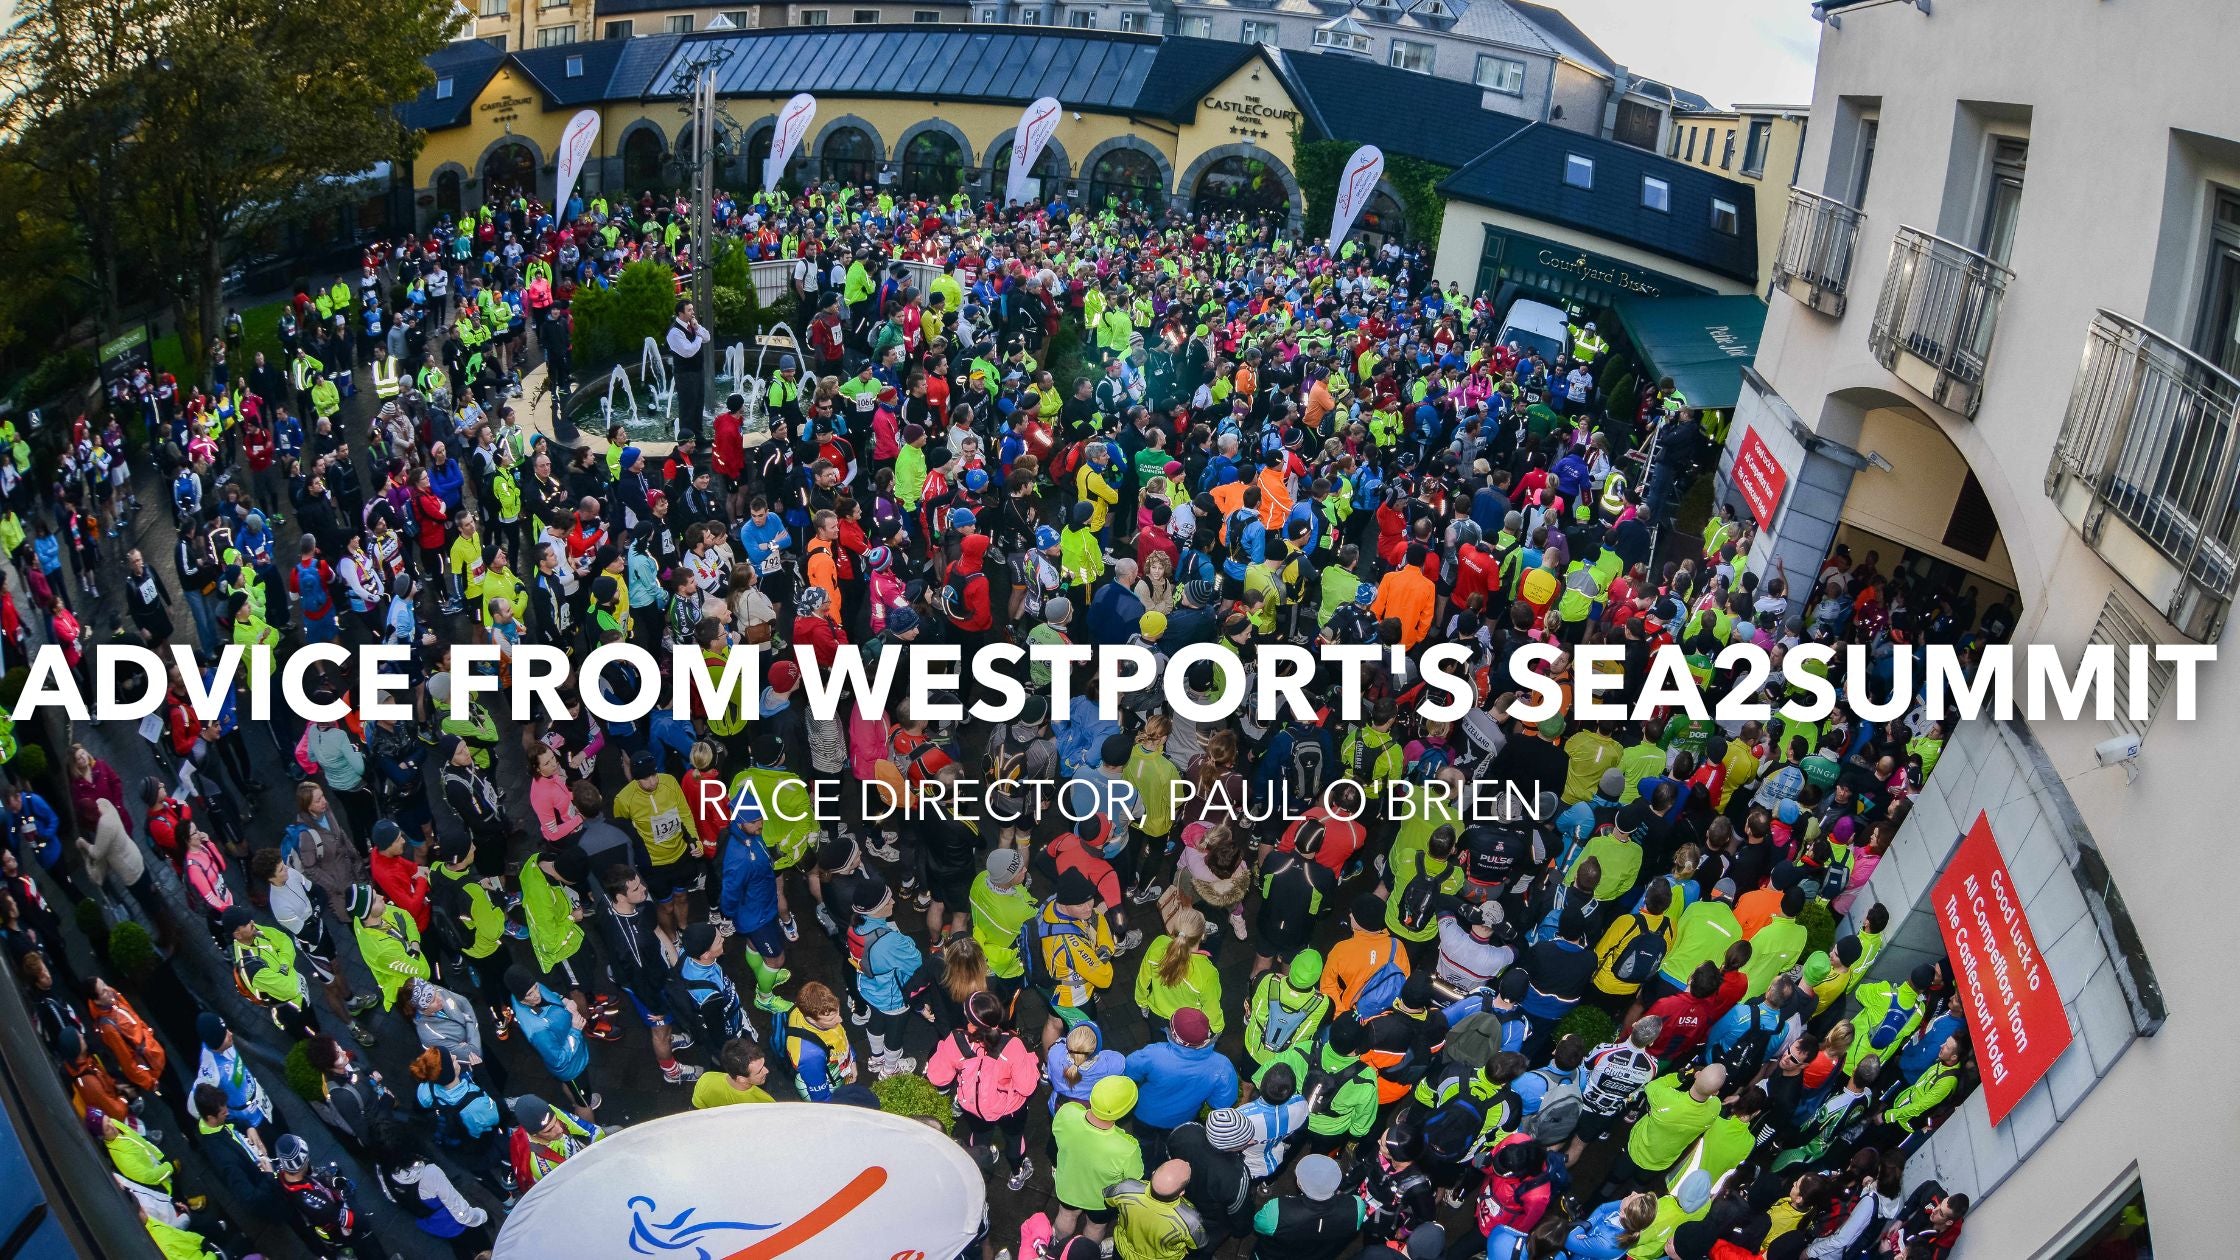 Advice from Westport's Sea2Summit Race Director, Paul O'Brien